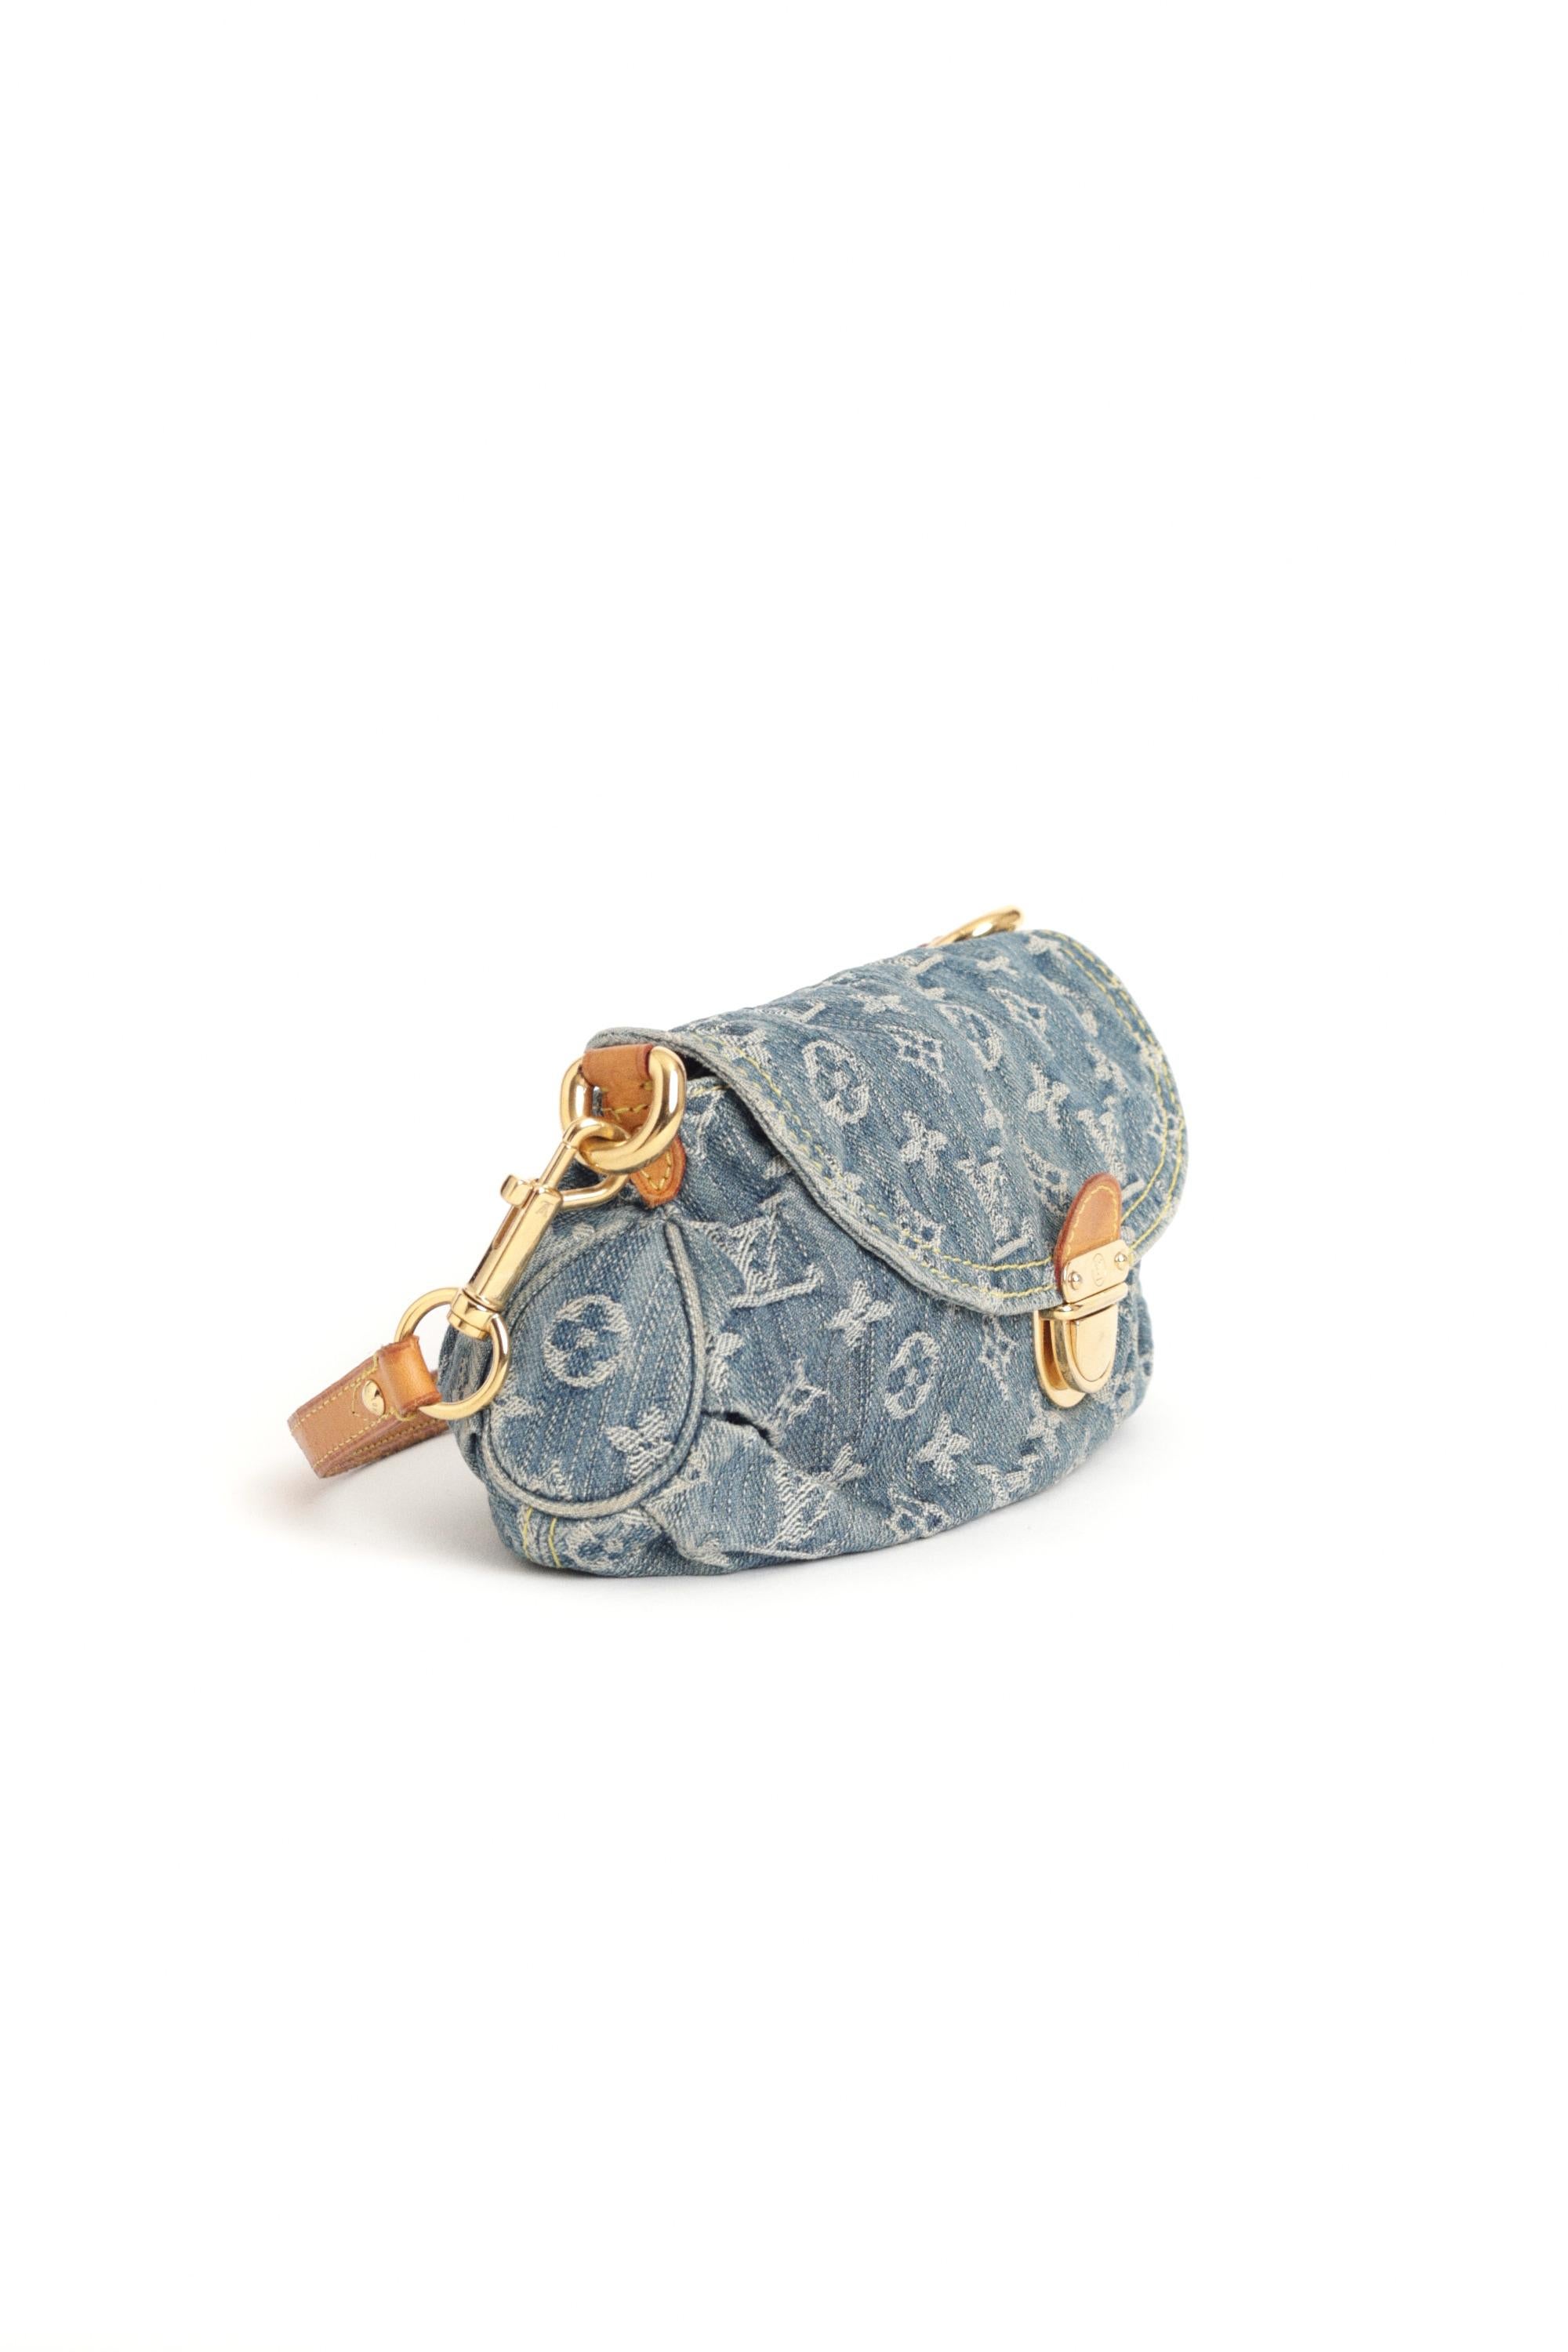 Louis Vuitton Monogram Denim Pleaty Handbag - 2 For Sale on